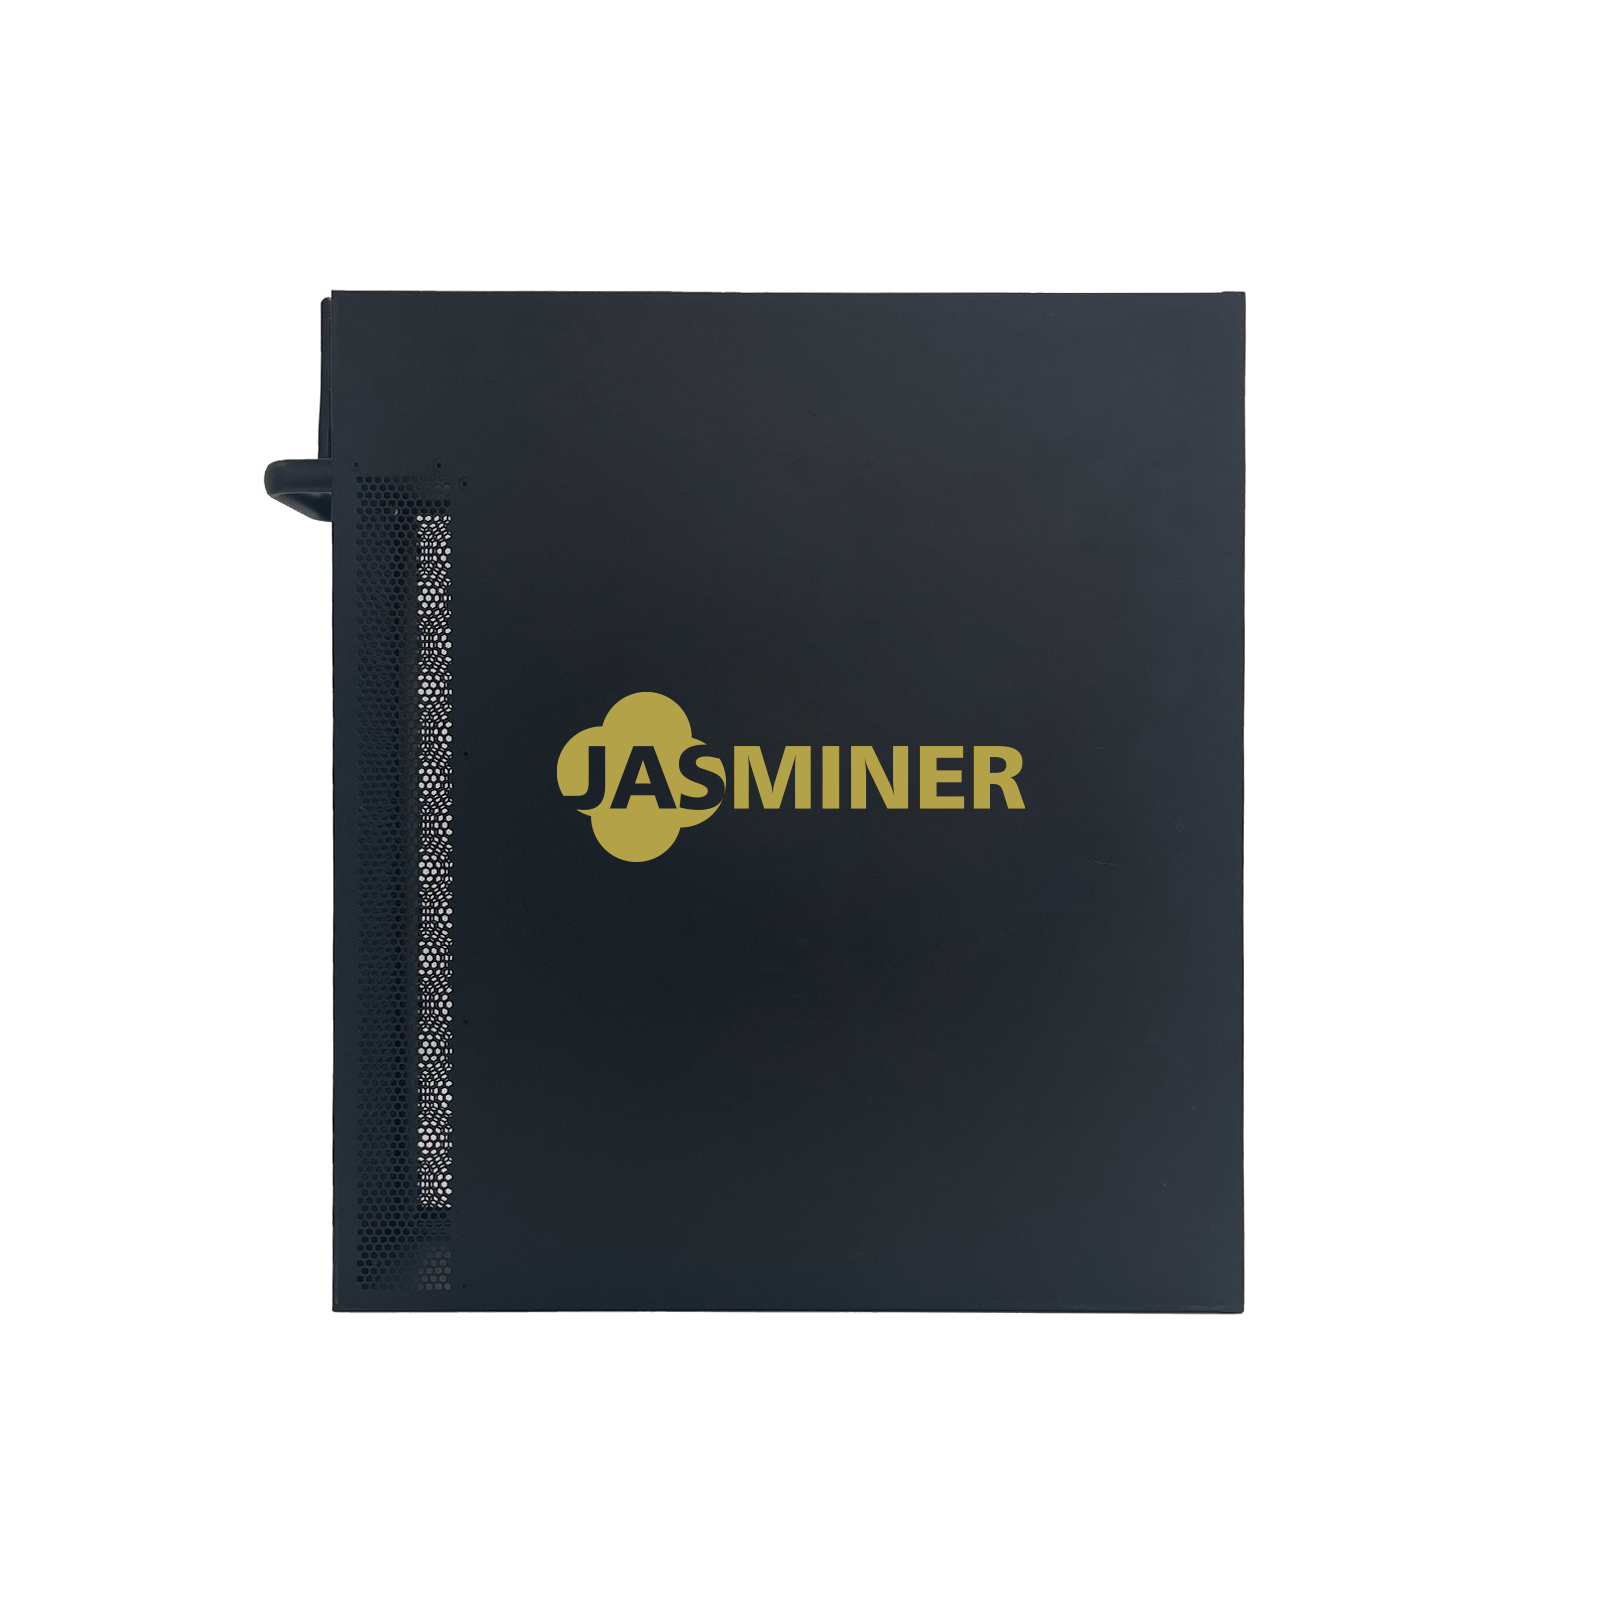 <tc>【Précommande】mineur de jasmin JASMINER X16-Q Serveur silencieux 3U haut débit Wi-Fi (1950MH)</tc>